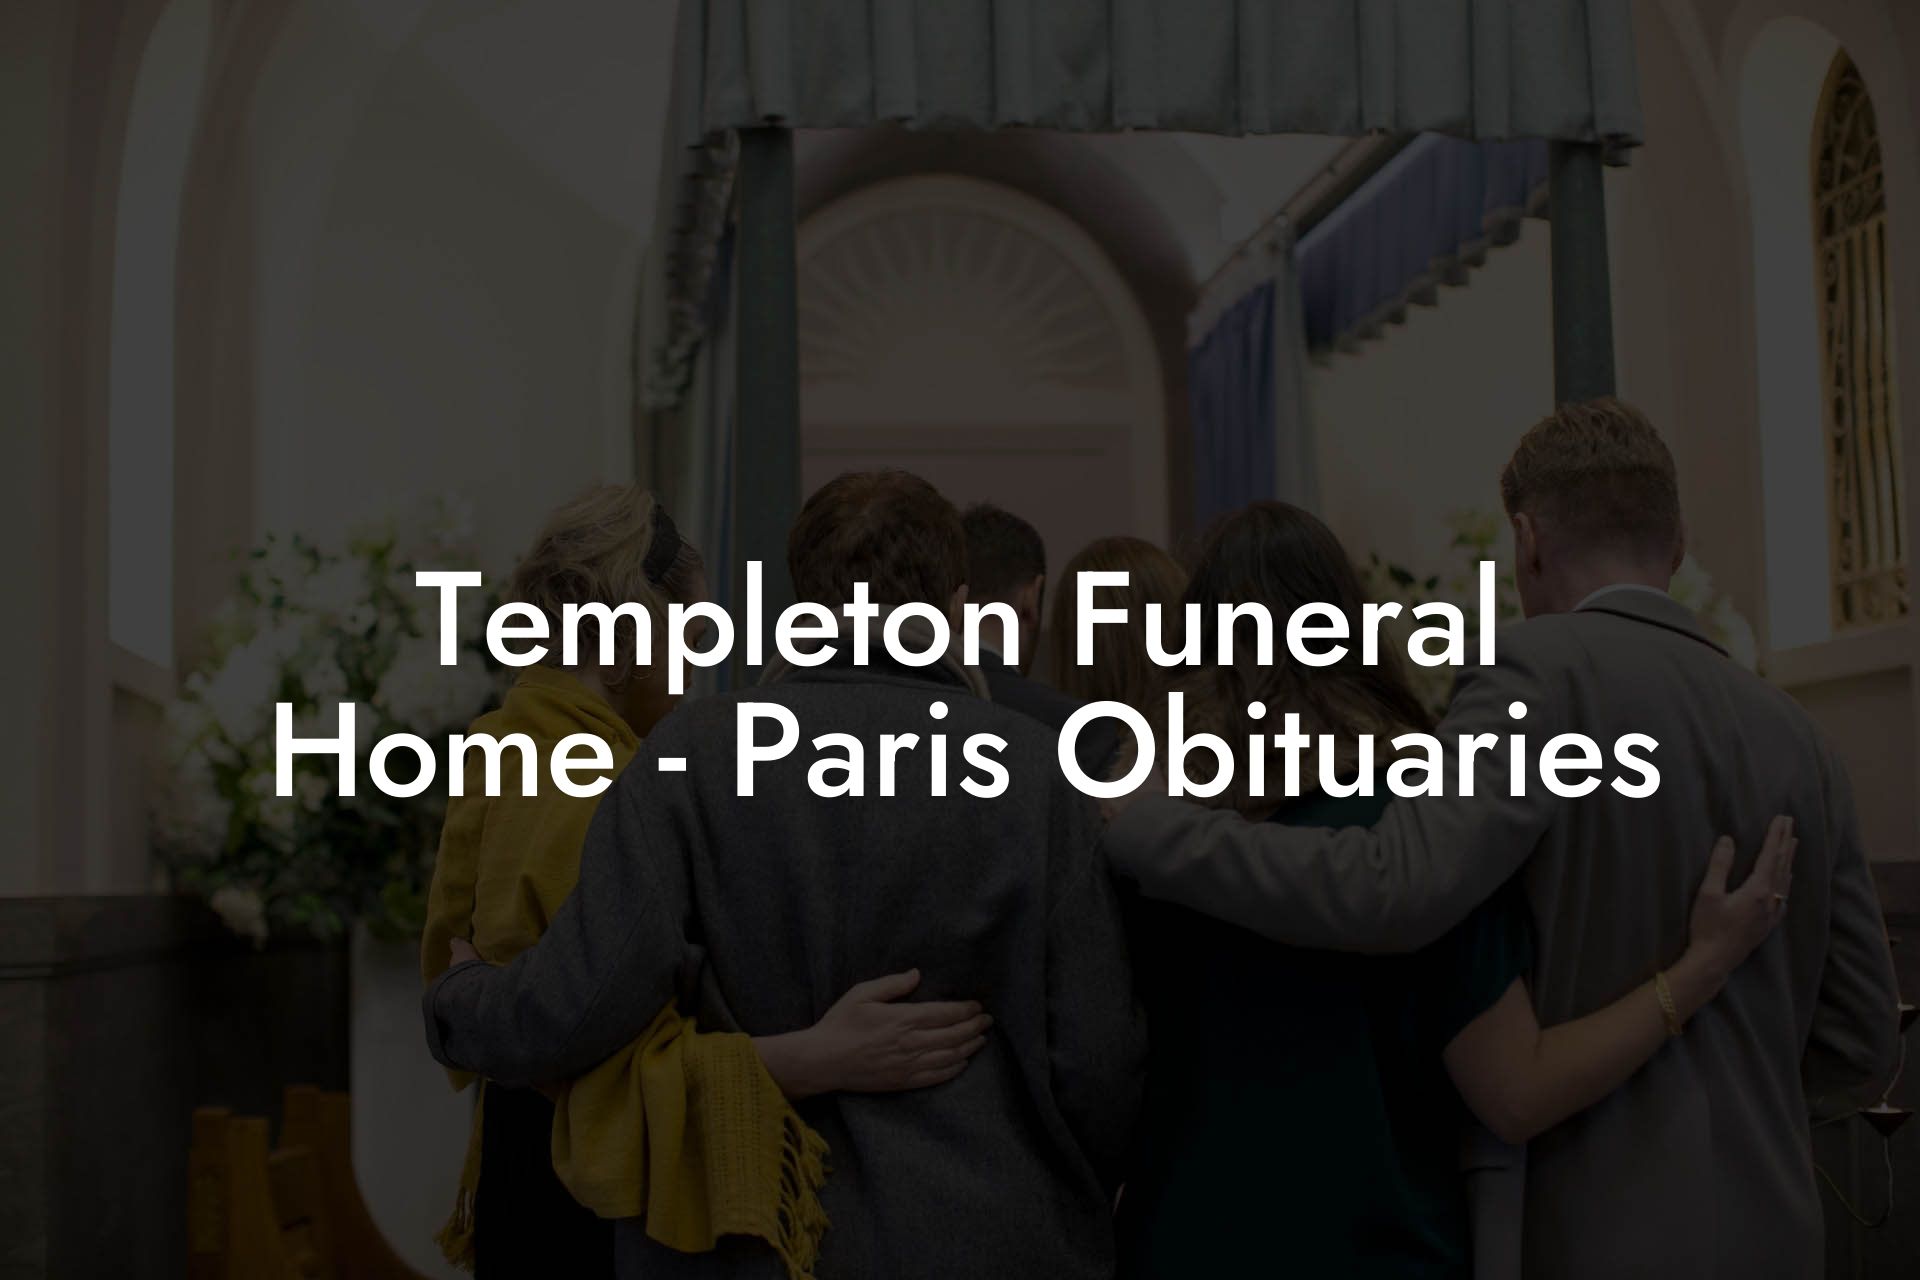 Templeton Funeral Home - Paris Obituaries